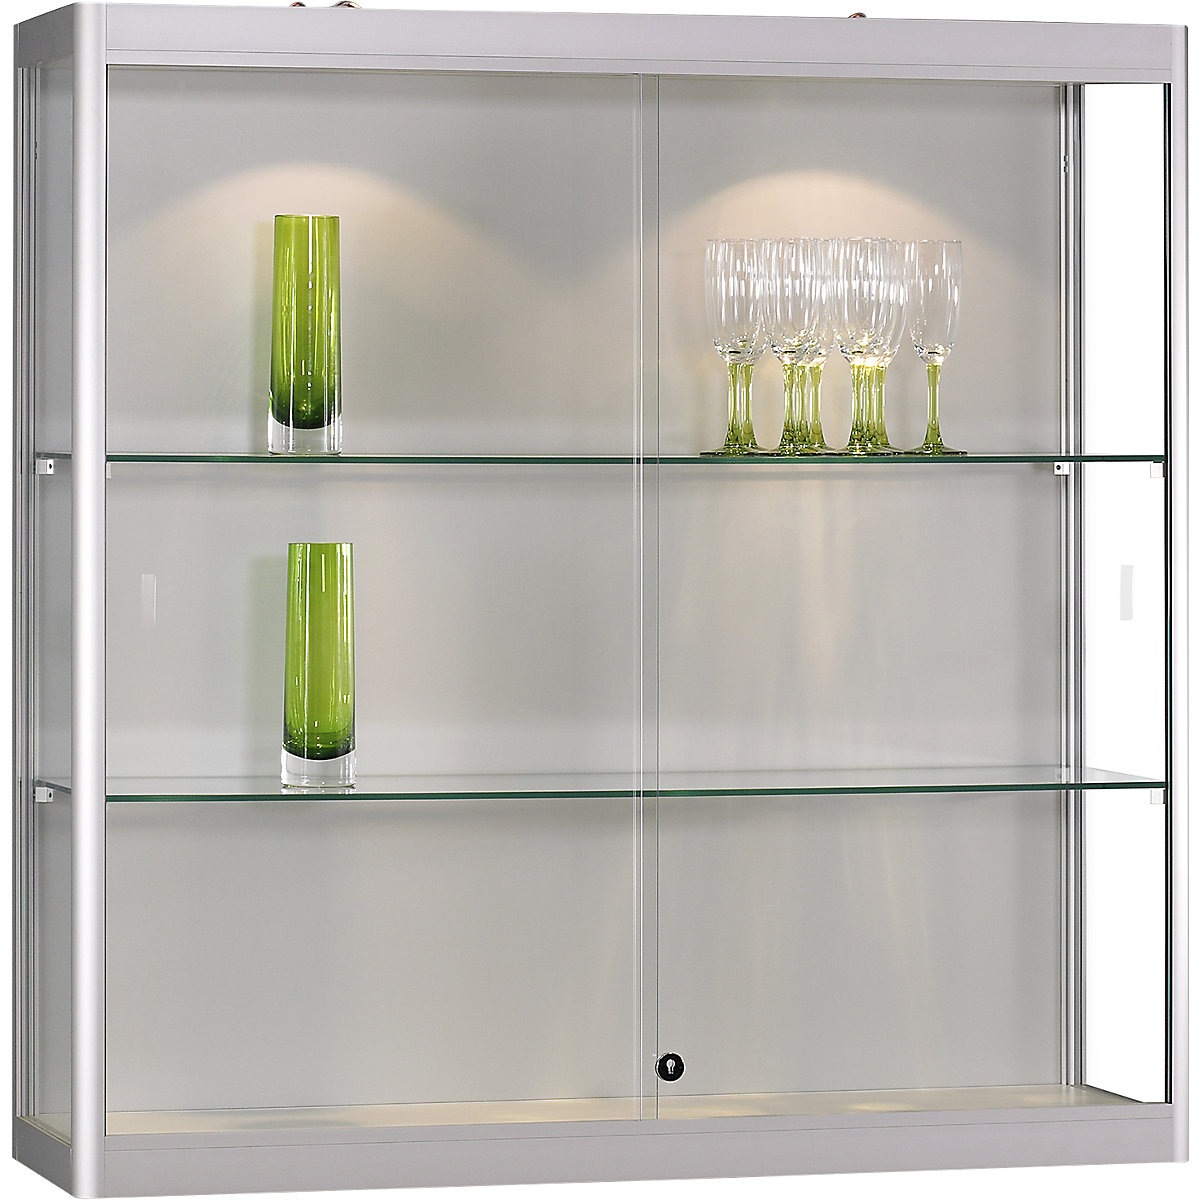 Wall mounted glass cabinet, LED lighting